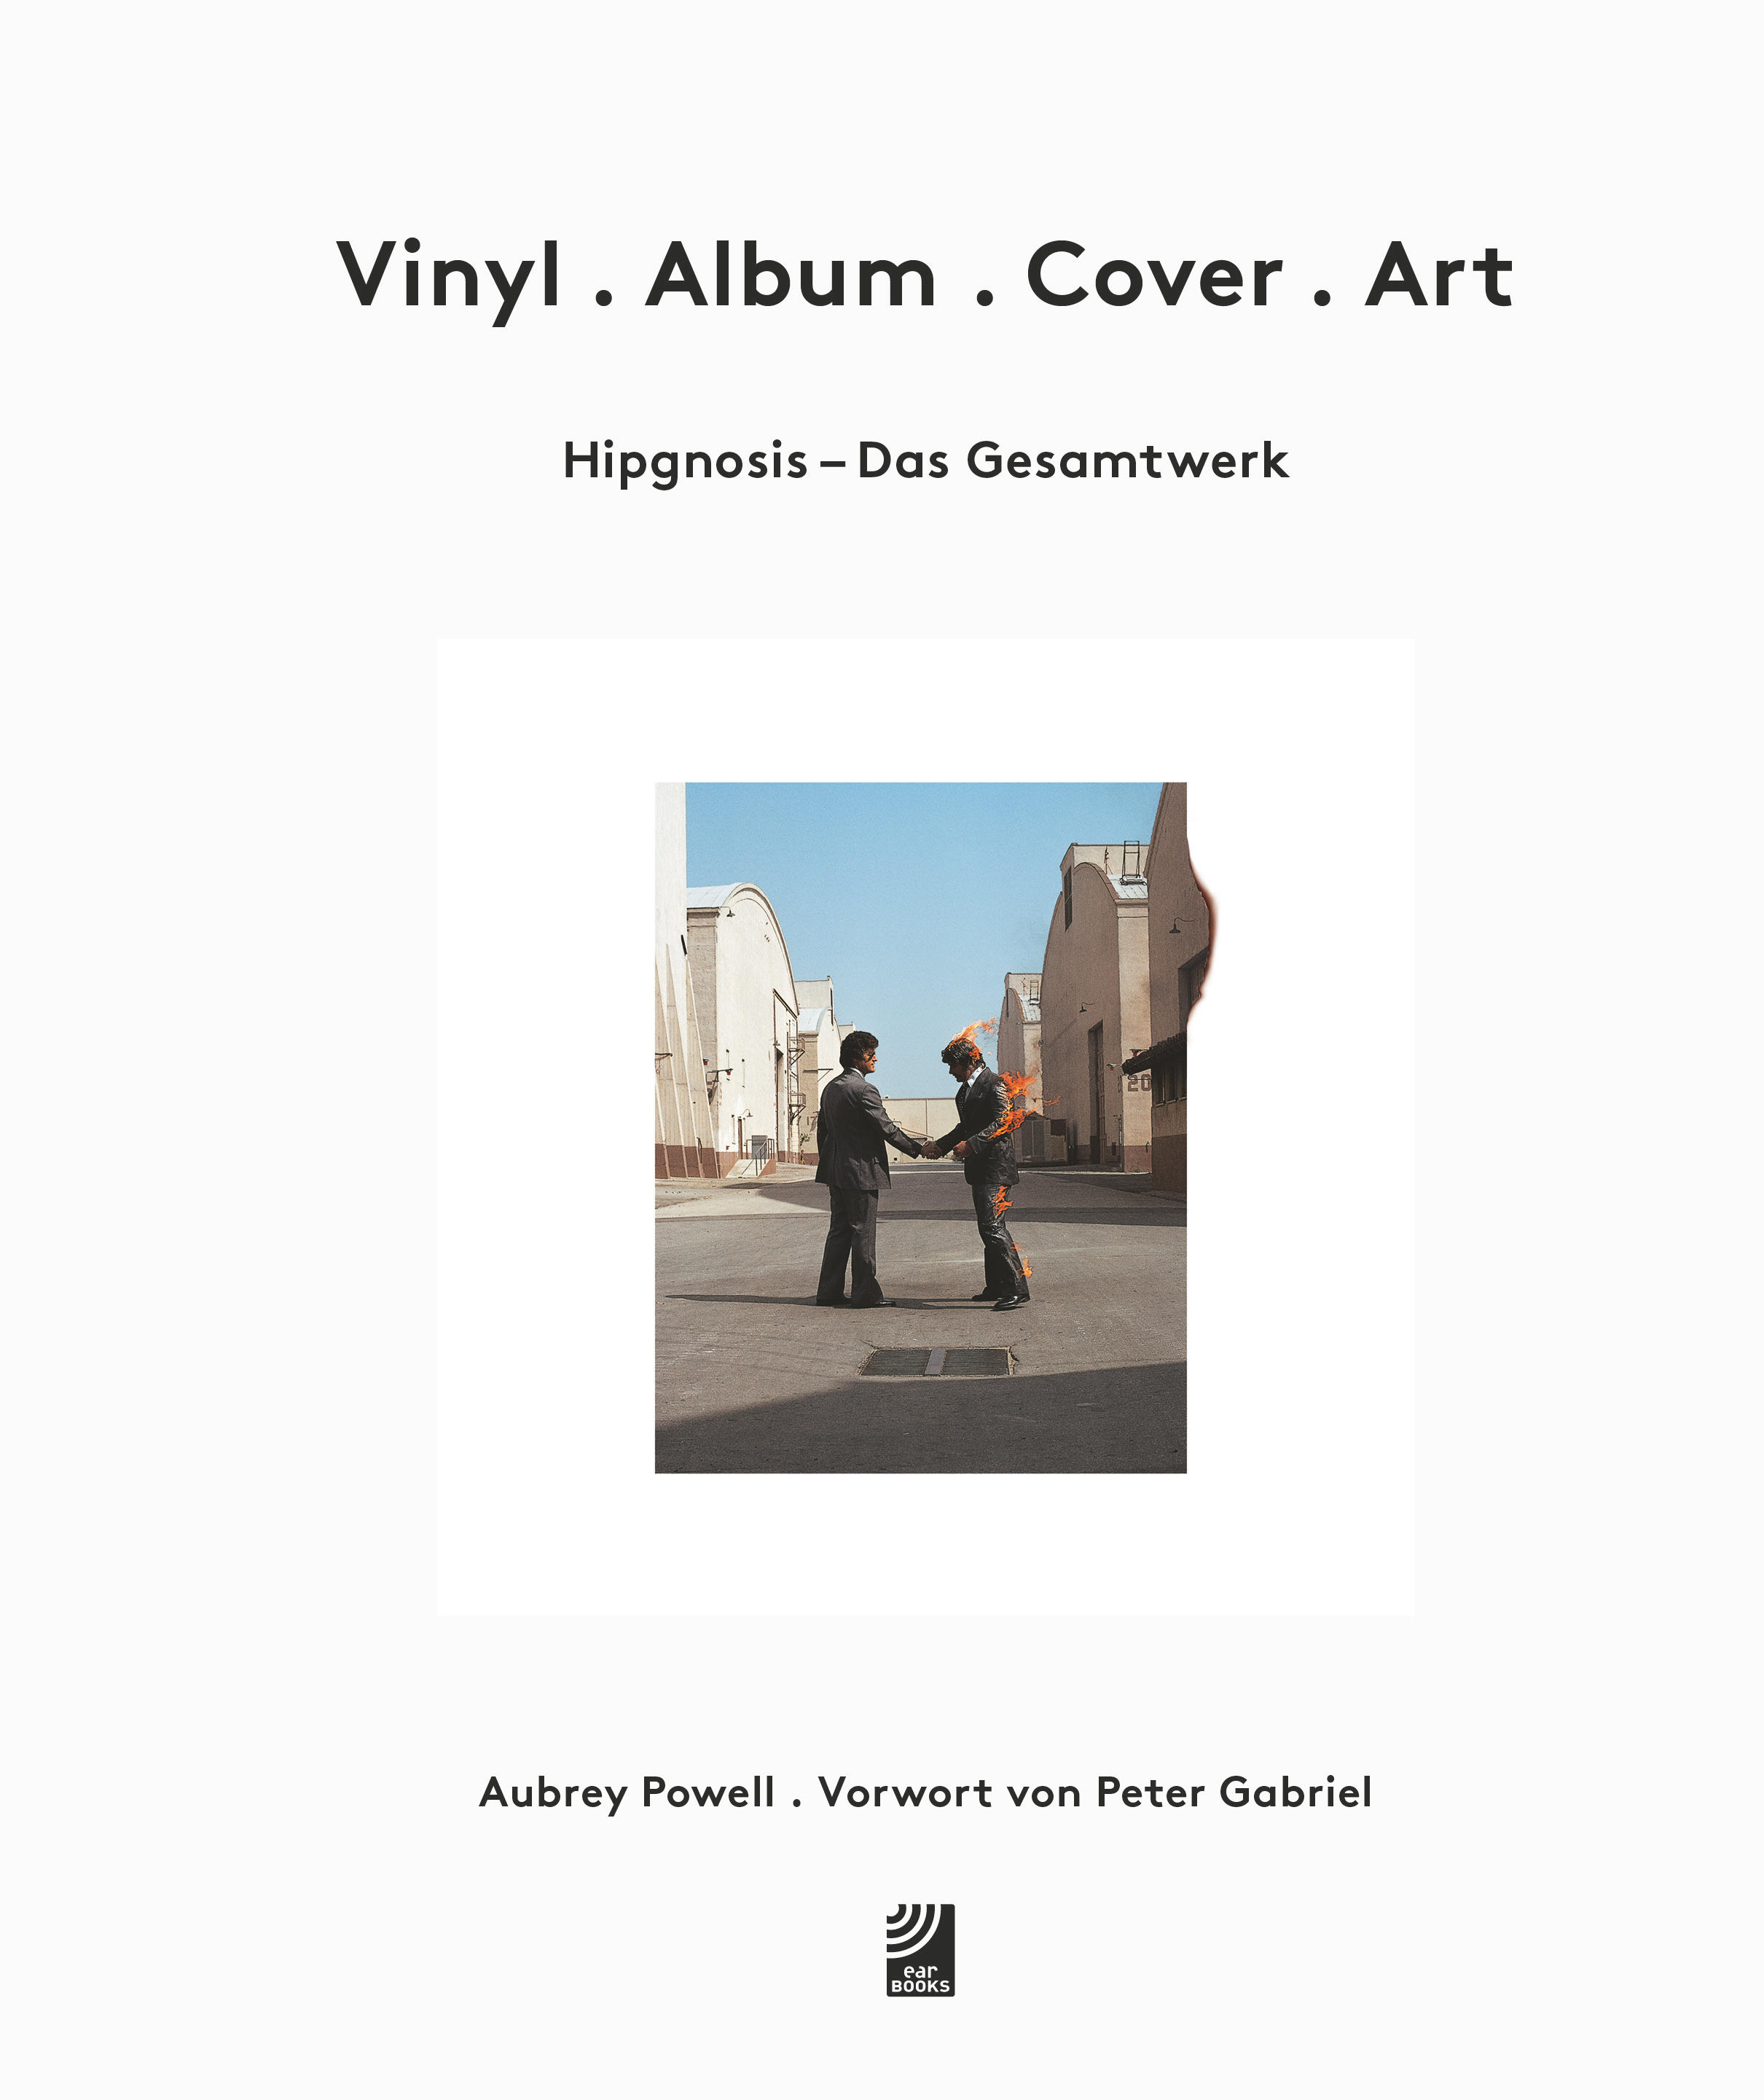 Hipgnosis Album Cover Art-Das Gesamtwerk Vinyl